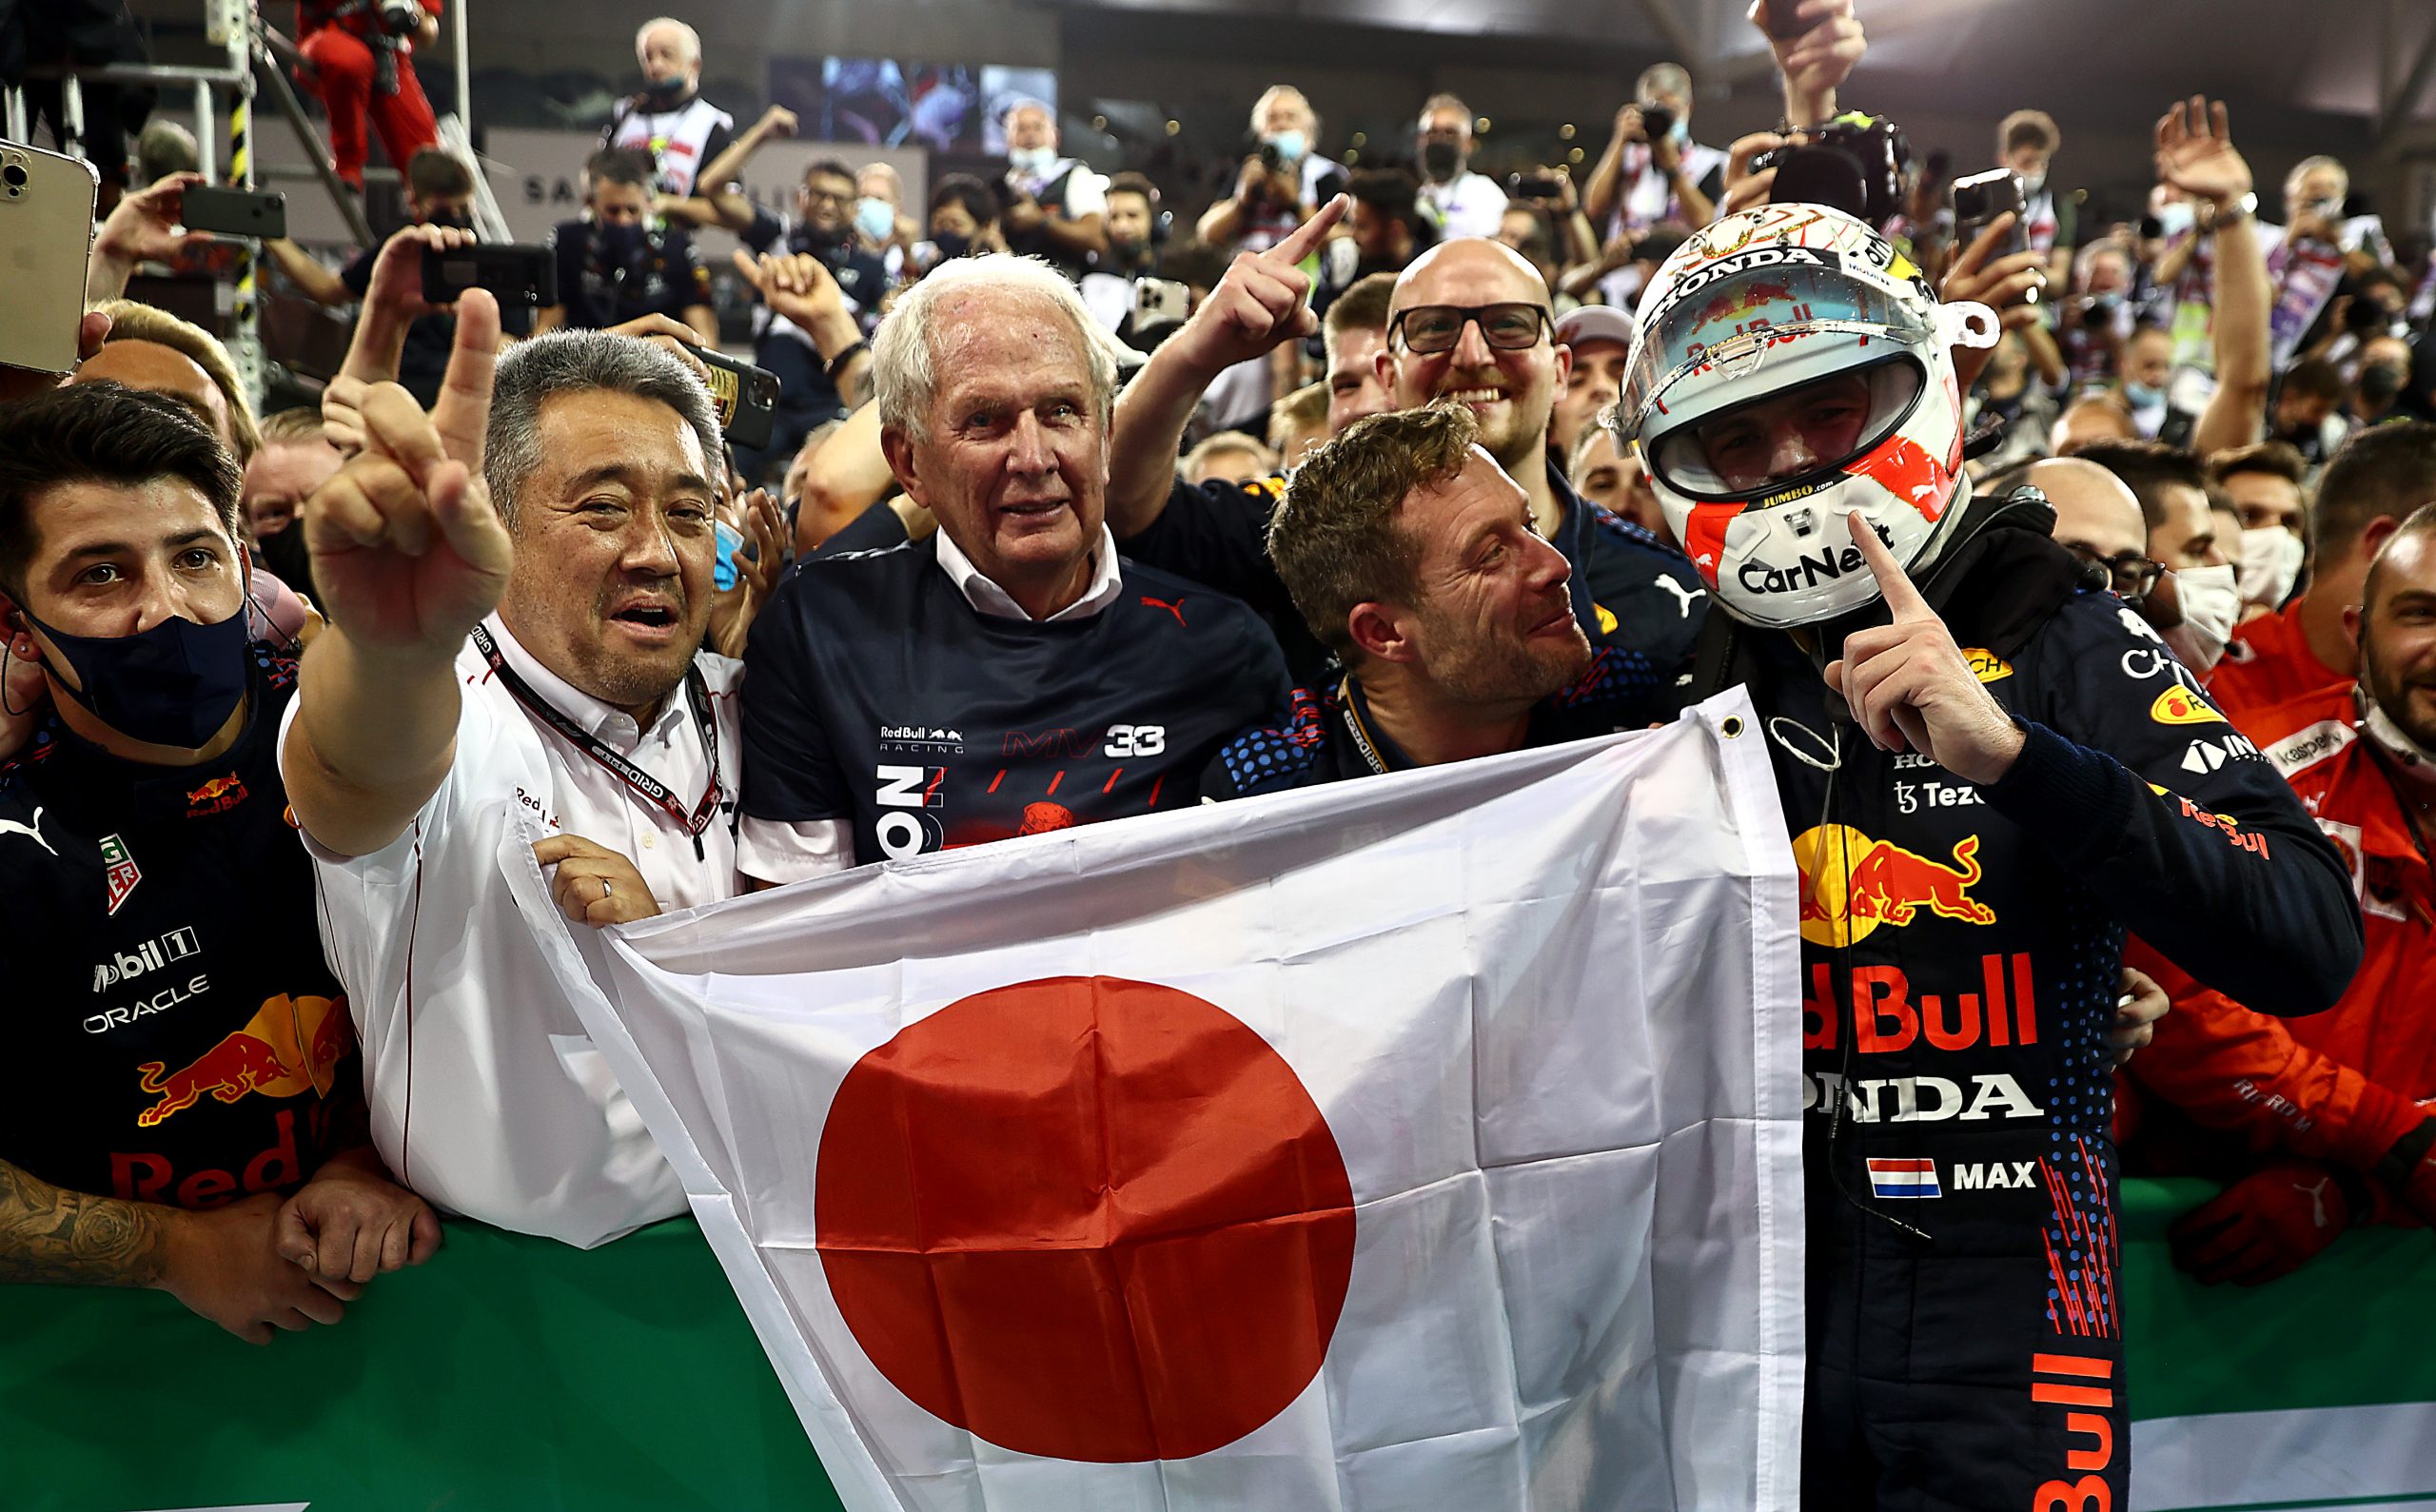 Honda bajnokot avatott a Forma 1 világ!